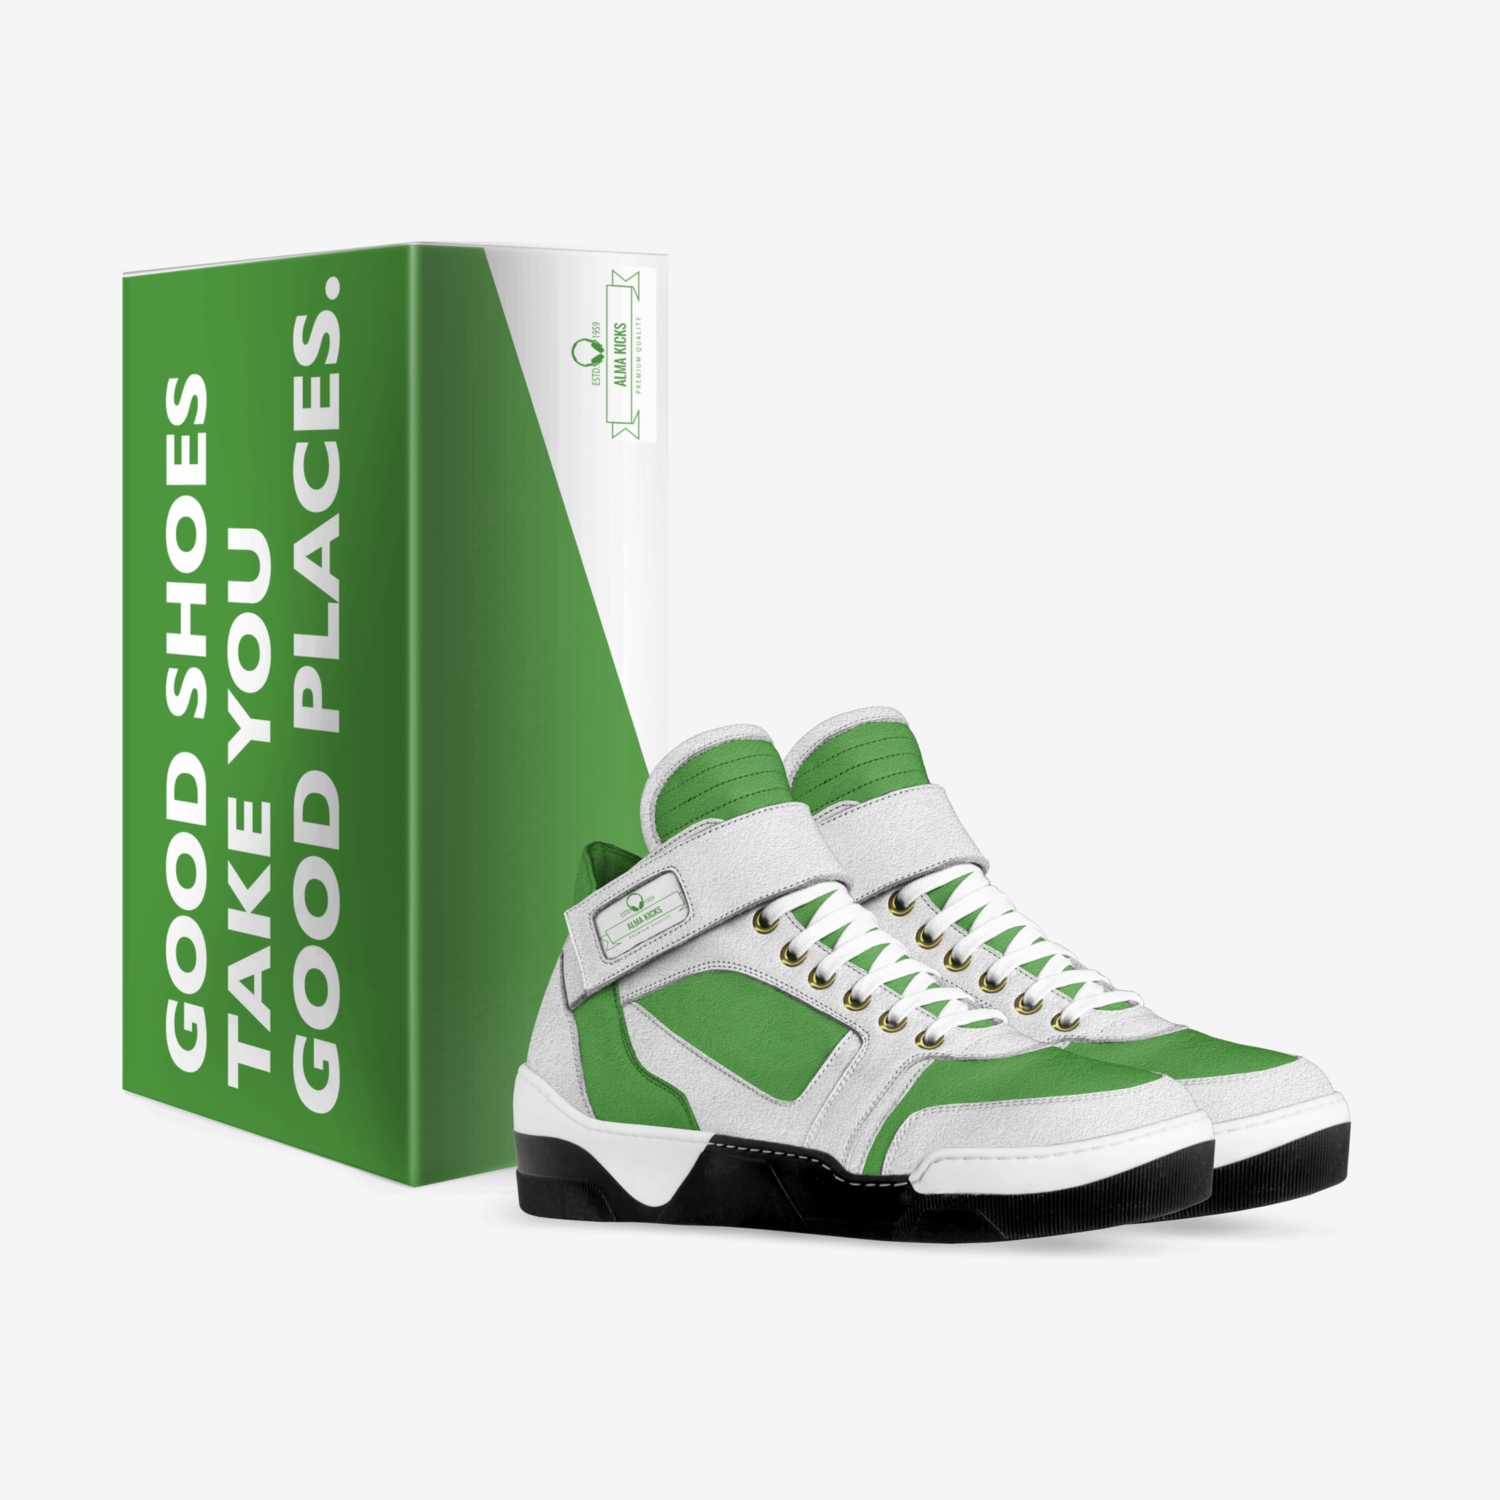 Alma kicks custom made in Italy shoes by Zaccheaus Keyshawn Wright | Box view